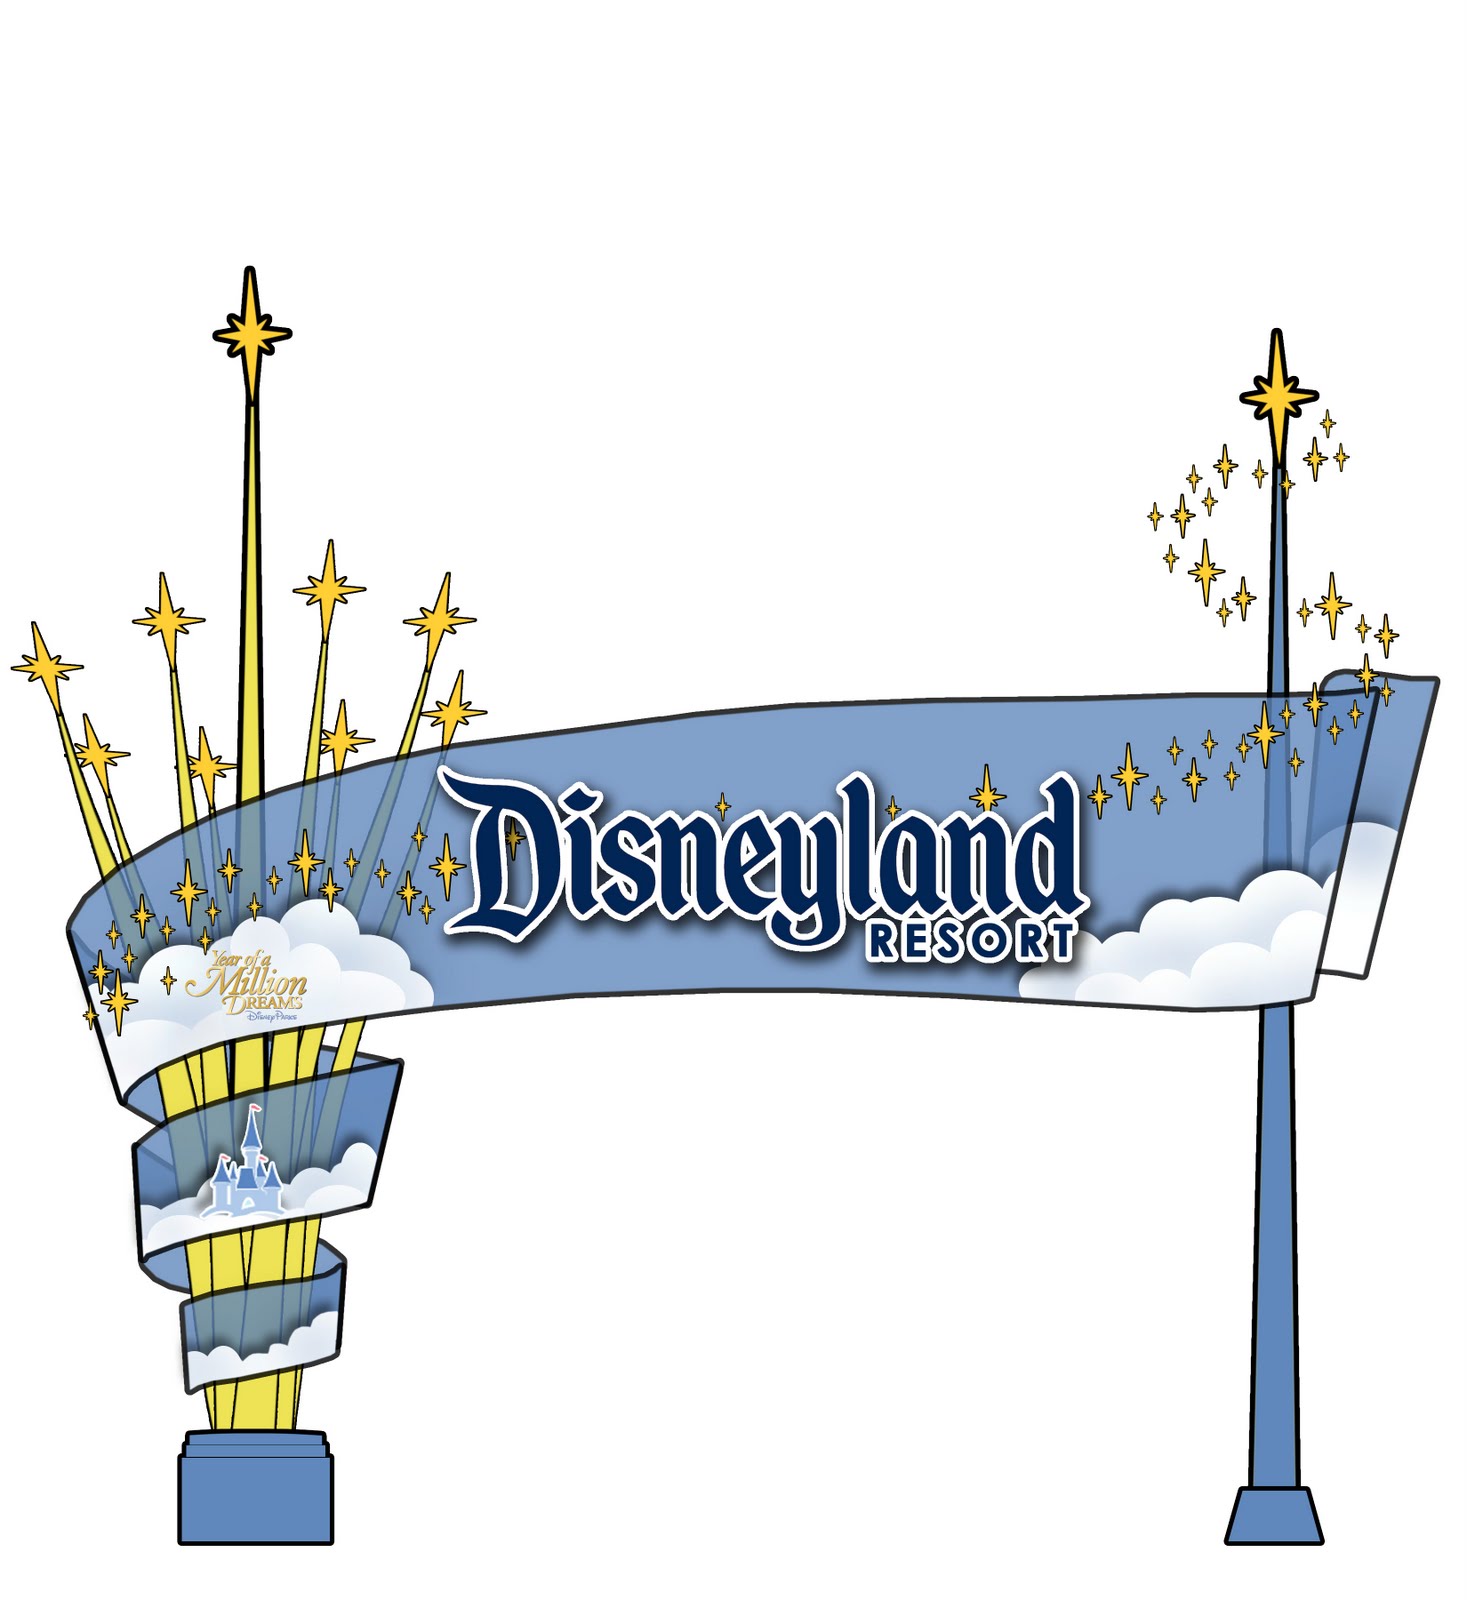 Disneyland California Re(P)ort: Disneyland Sign 2000s